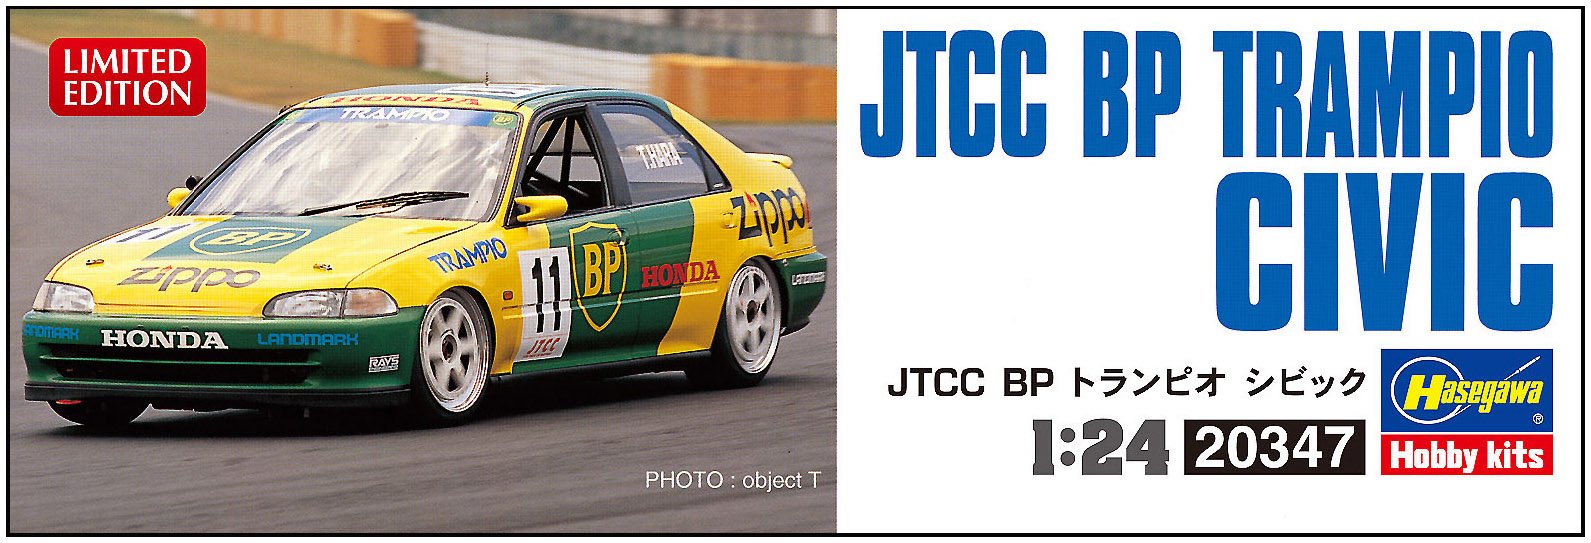 Hasegawa 20347 Jtcc Bp Tranpio Civic 1/24 Japanese Plastic Scale Racing Cars